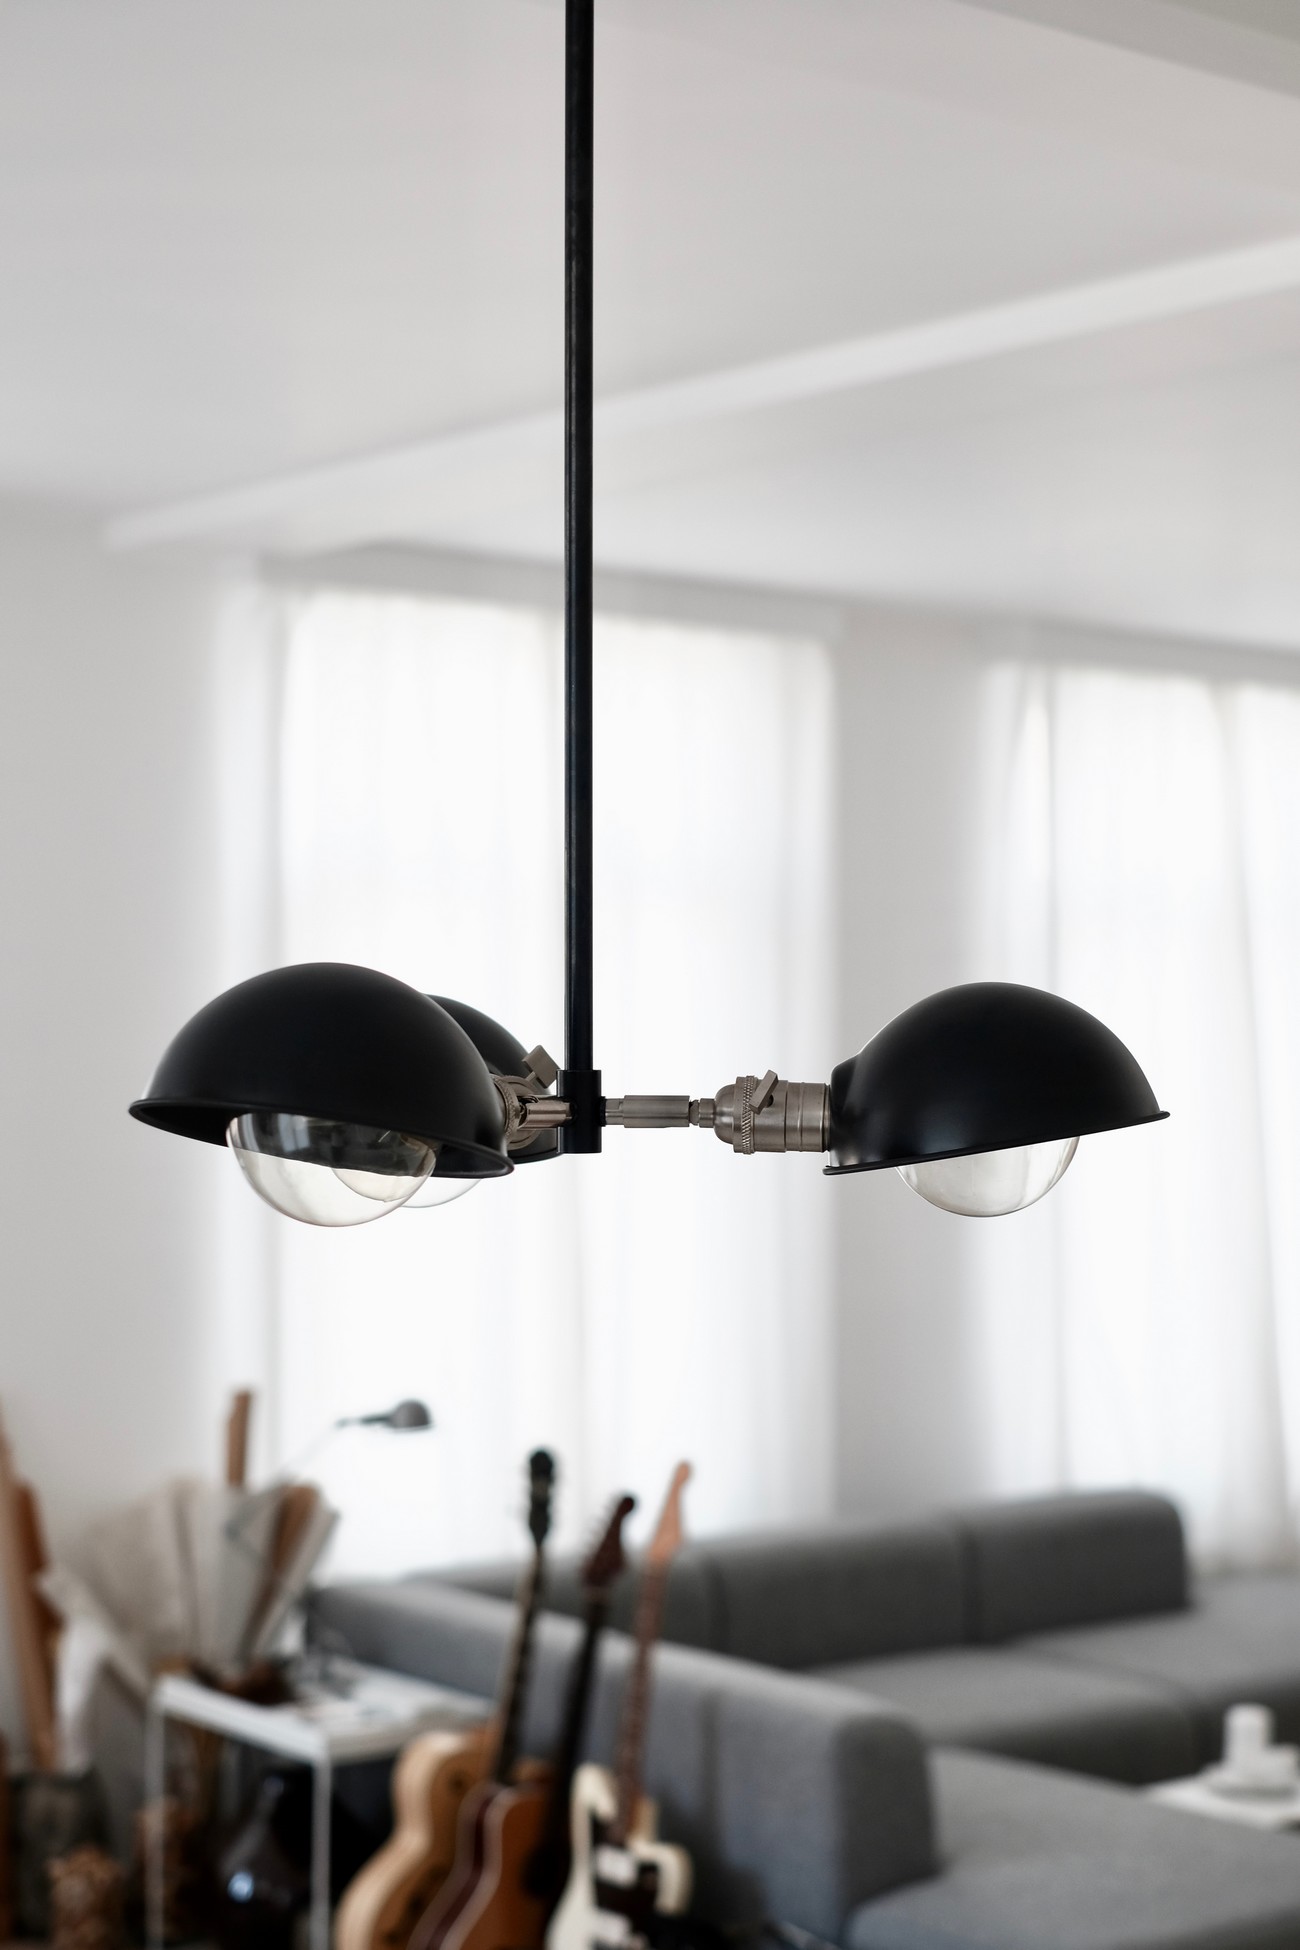 Tibods 3-light pendant adjustable shade chandelier